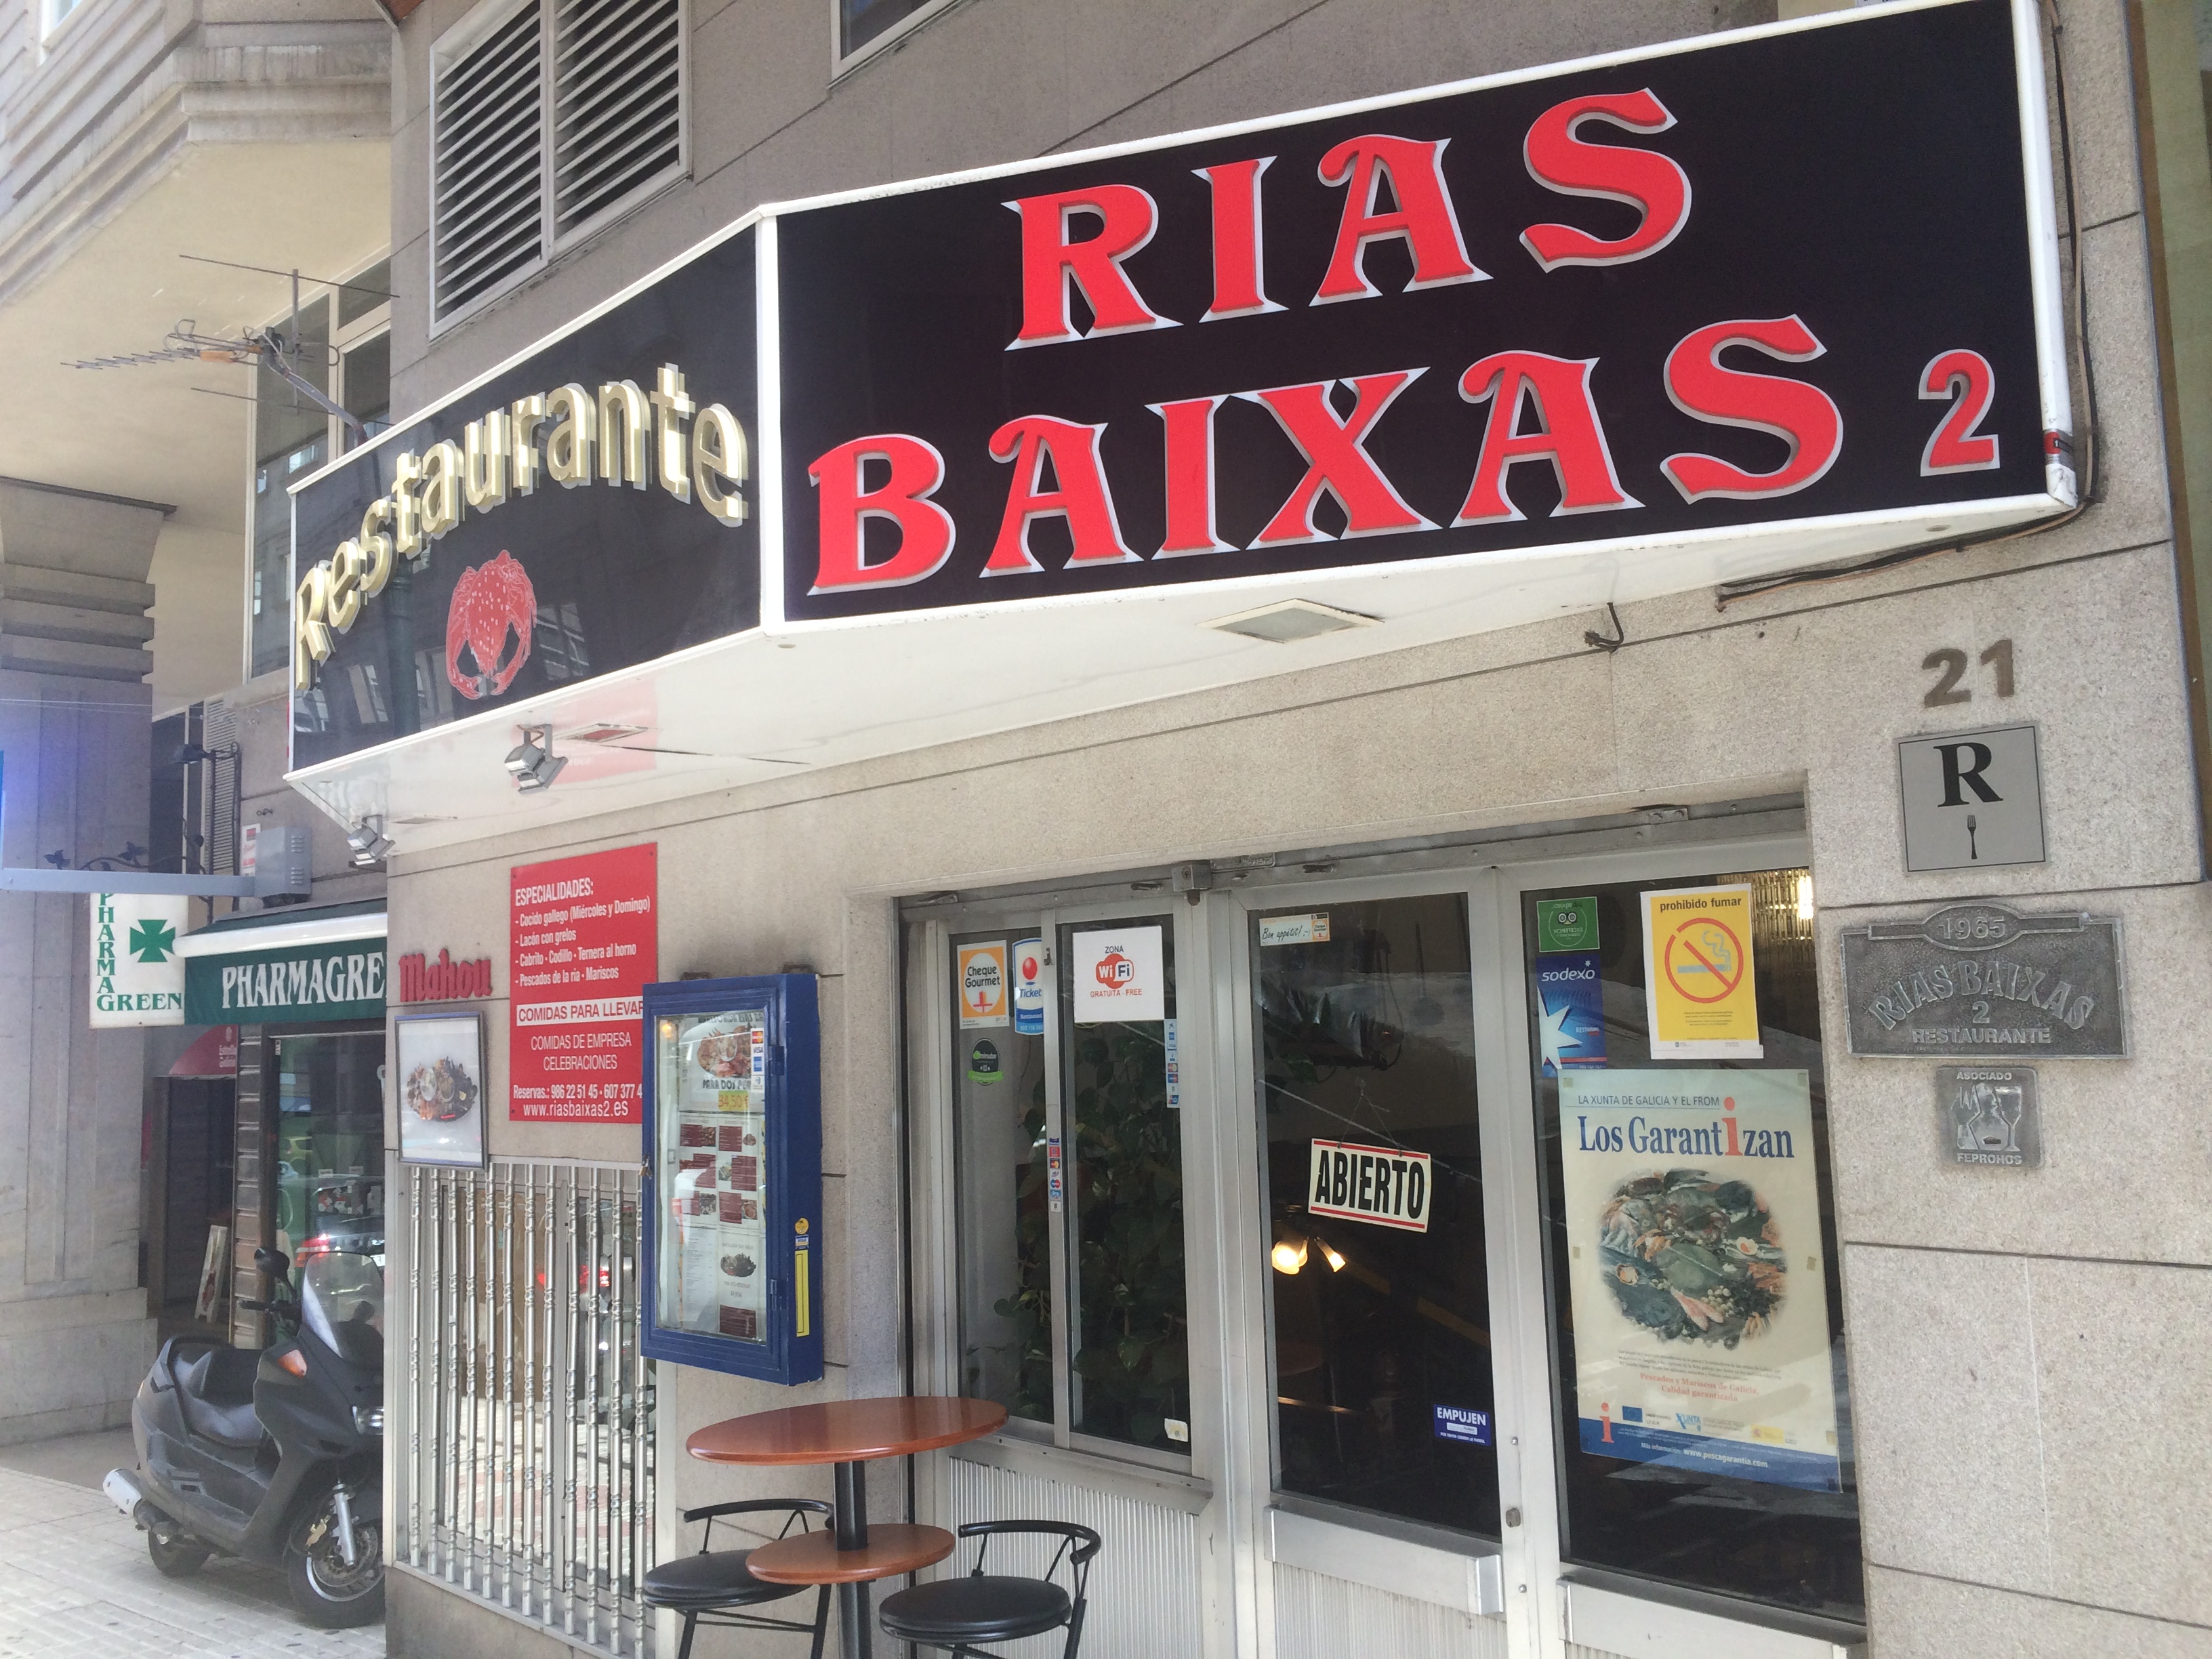 Restaurante Rías Baixas 2 (seafood restaurant) - Vigo, Spain